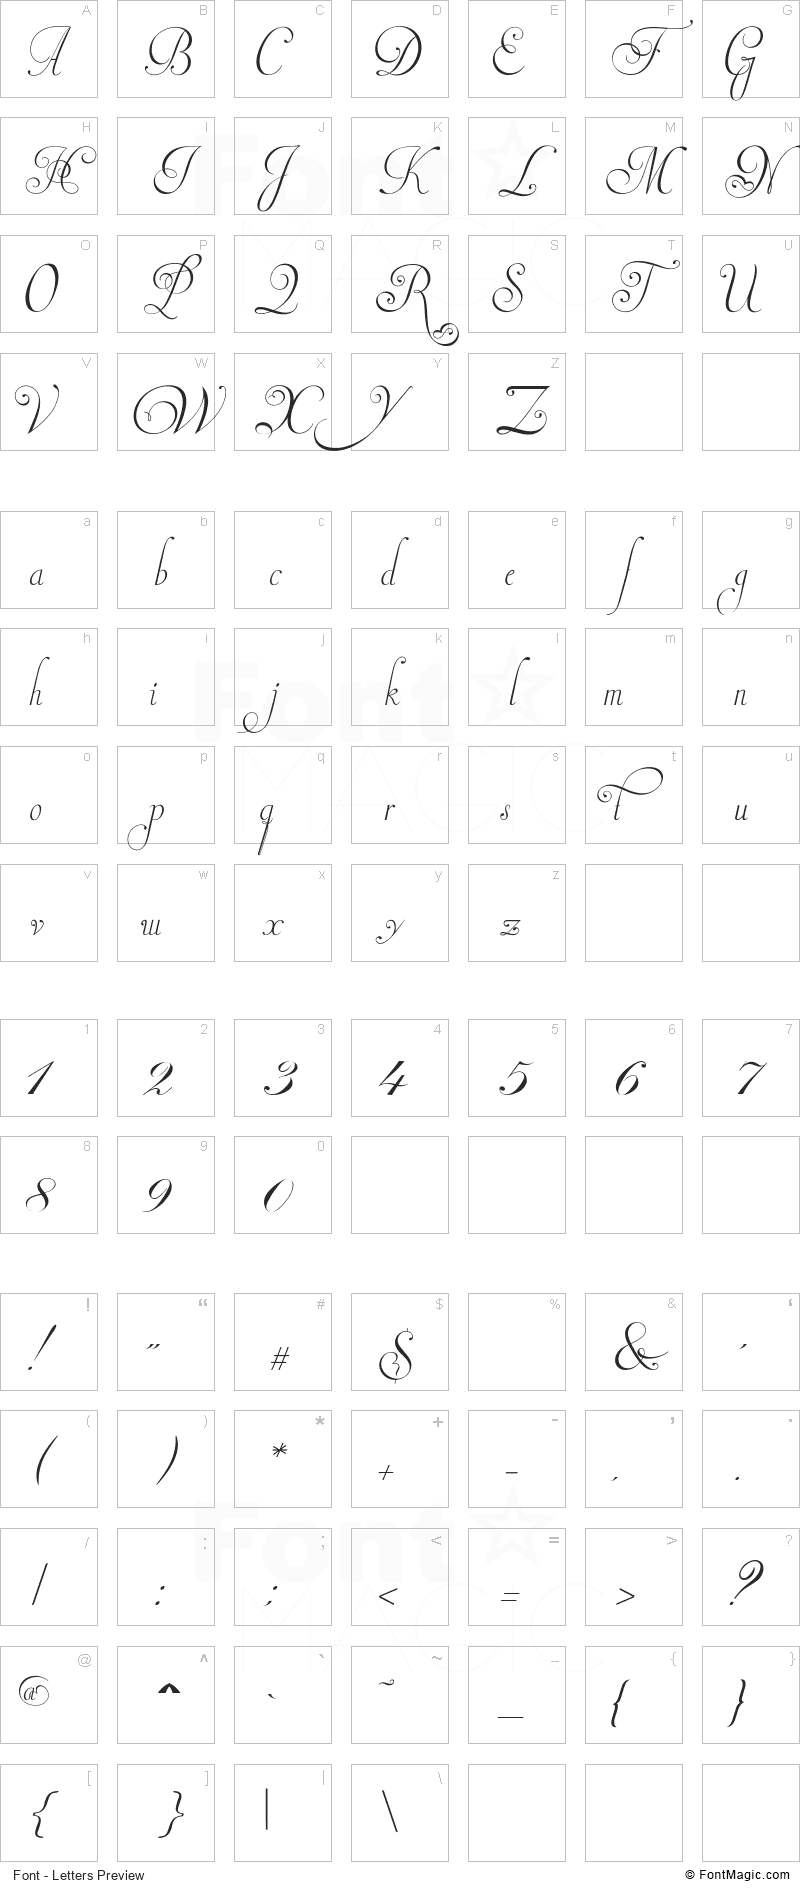 Invitation Script Font - All Latters Preview Chart